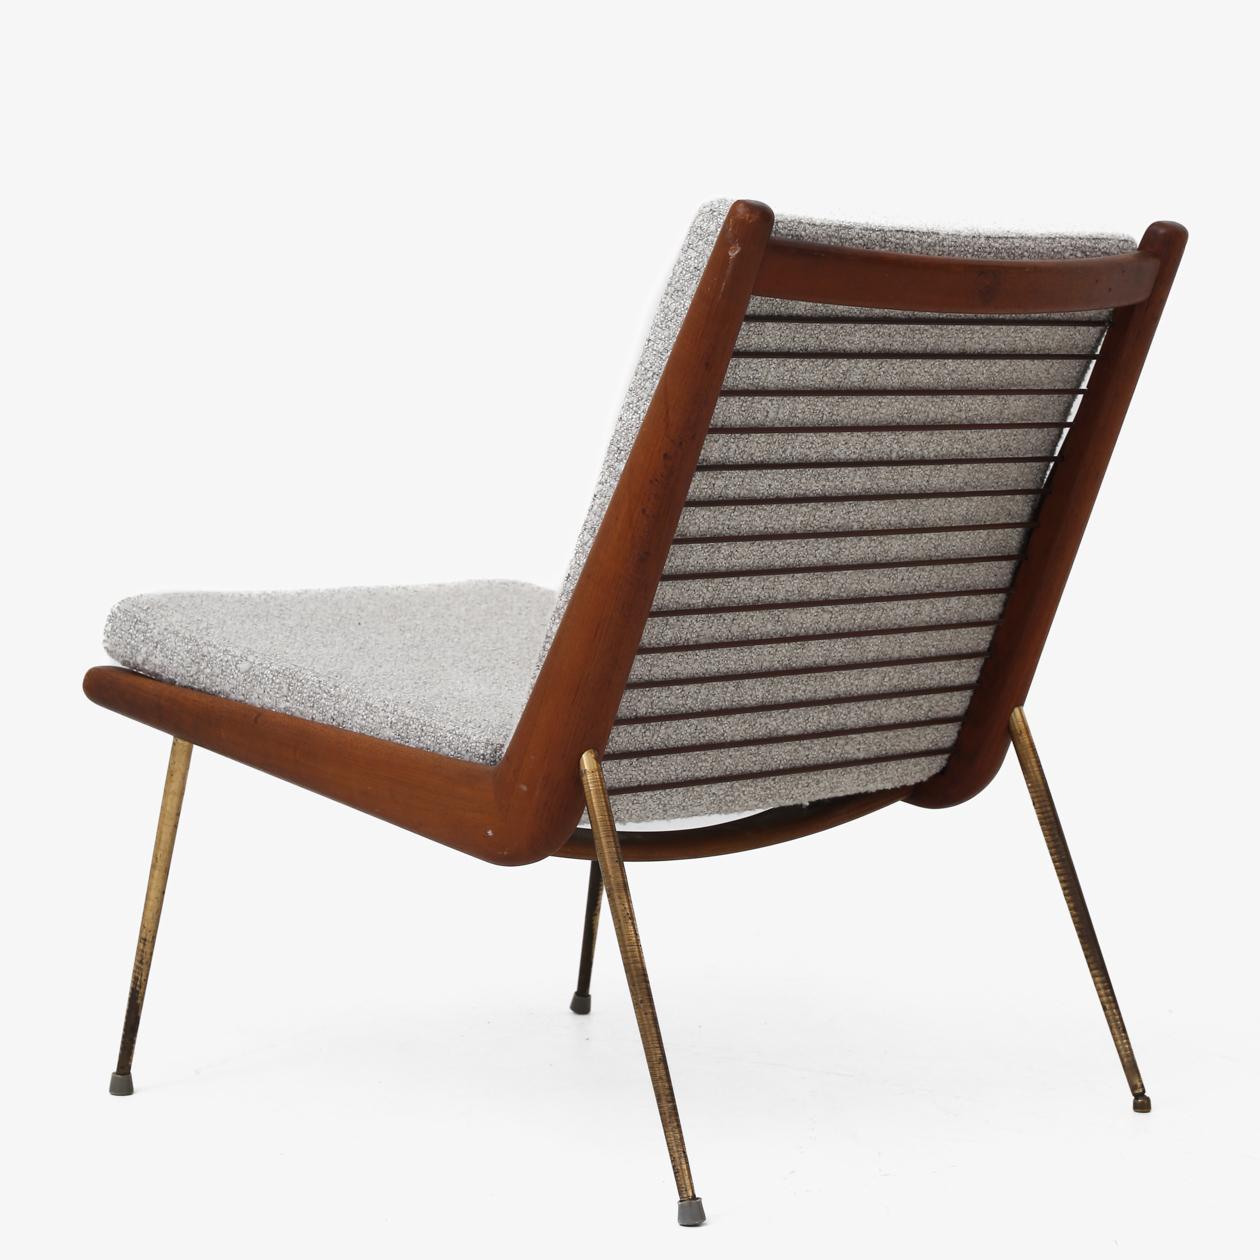 FD 134 - 'Boomerang' armchair in teak, brass legs and newly upholstered cushions in Malou Raphia. Peter Hvidt & Orla M. Nielsen / France & Daverkosen.